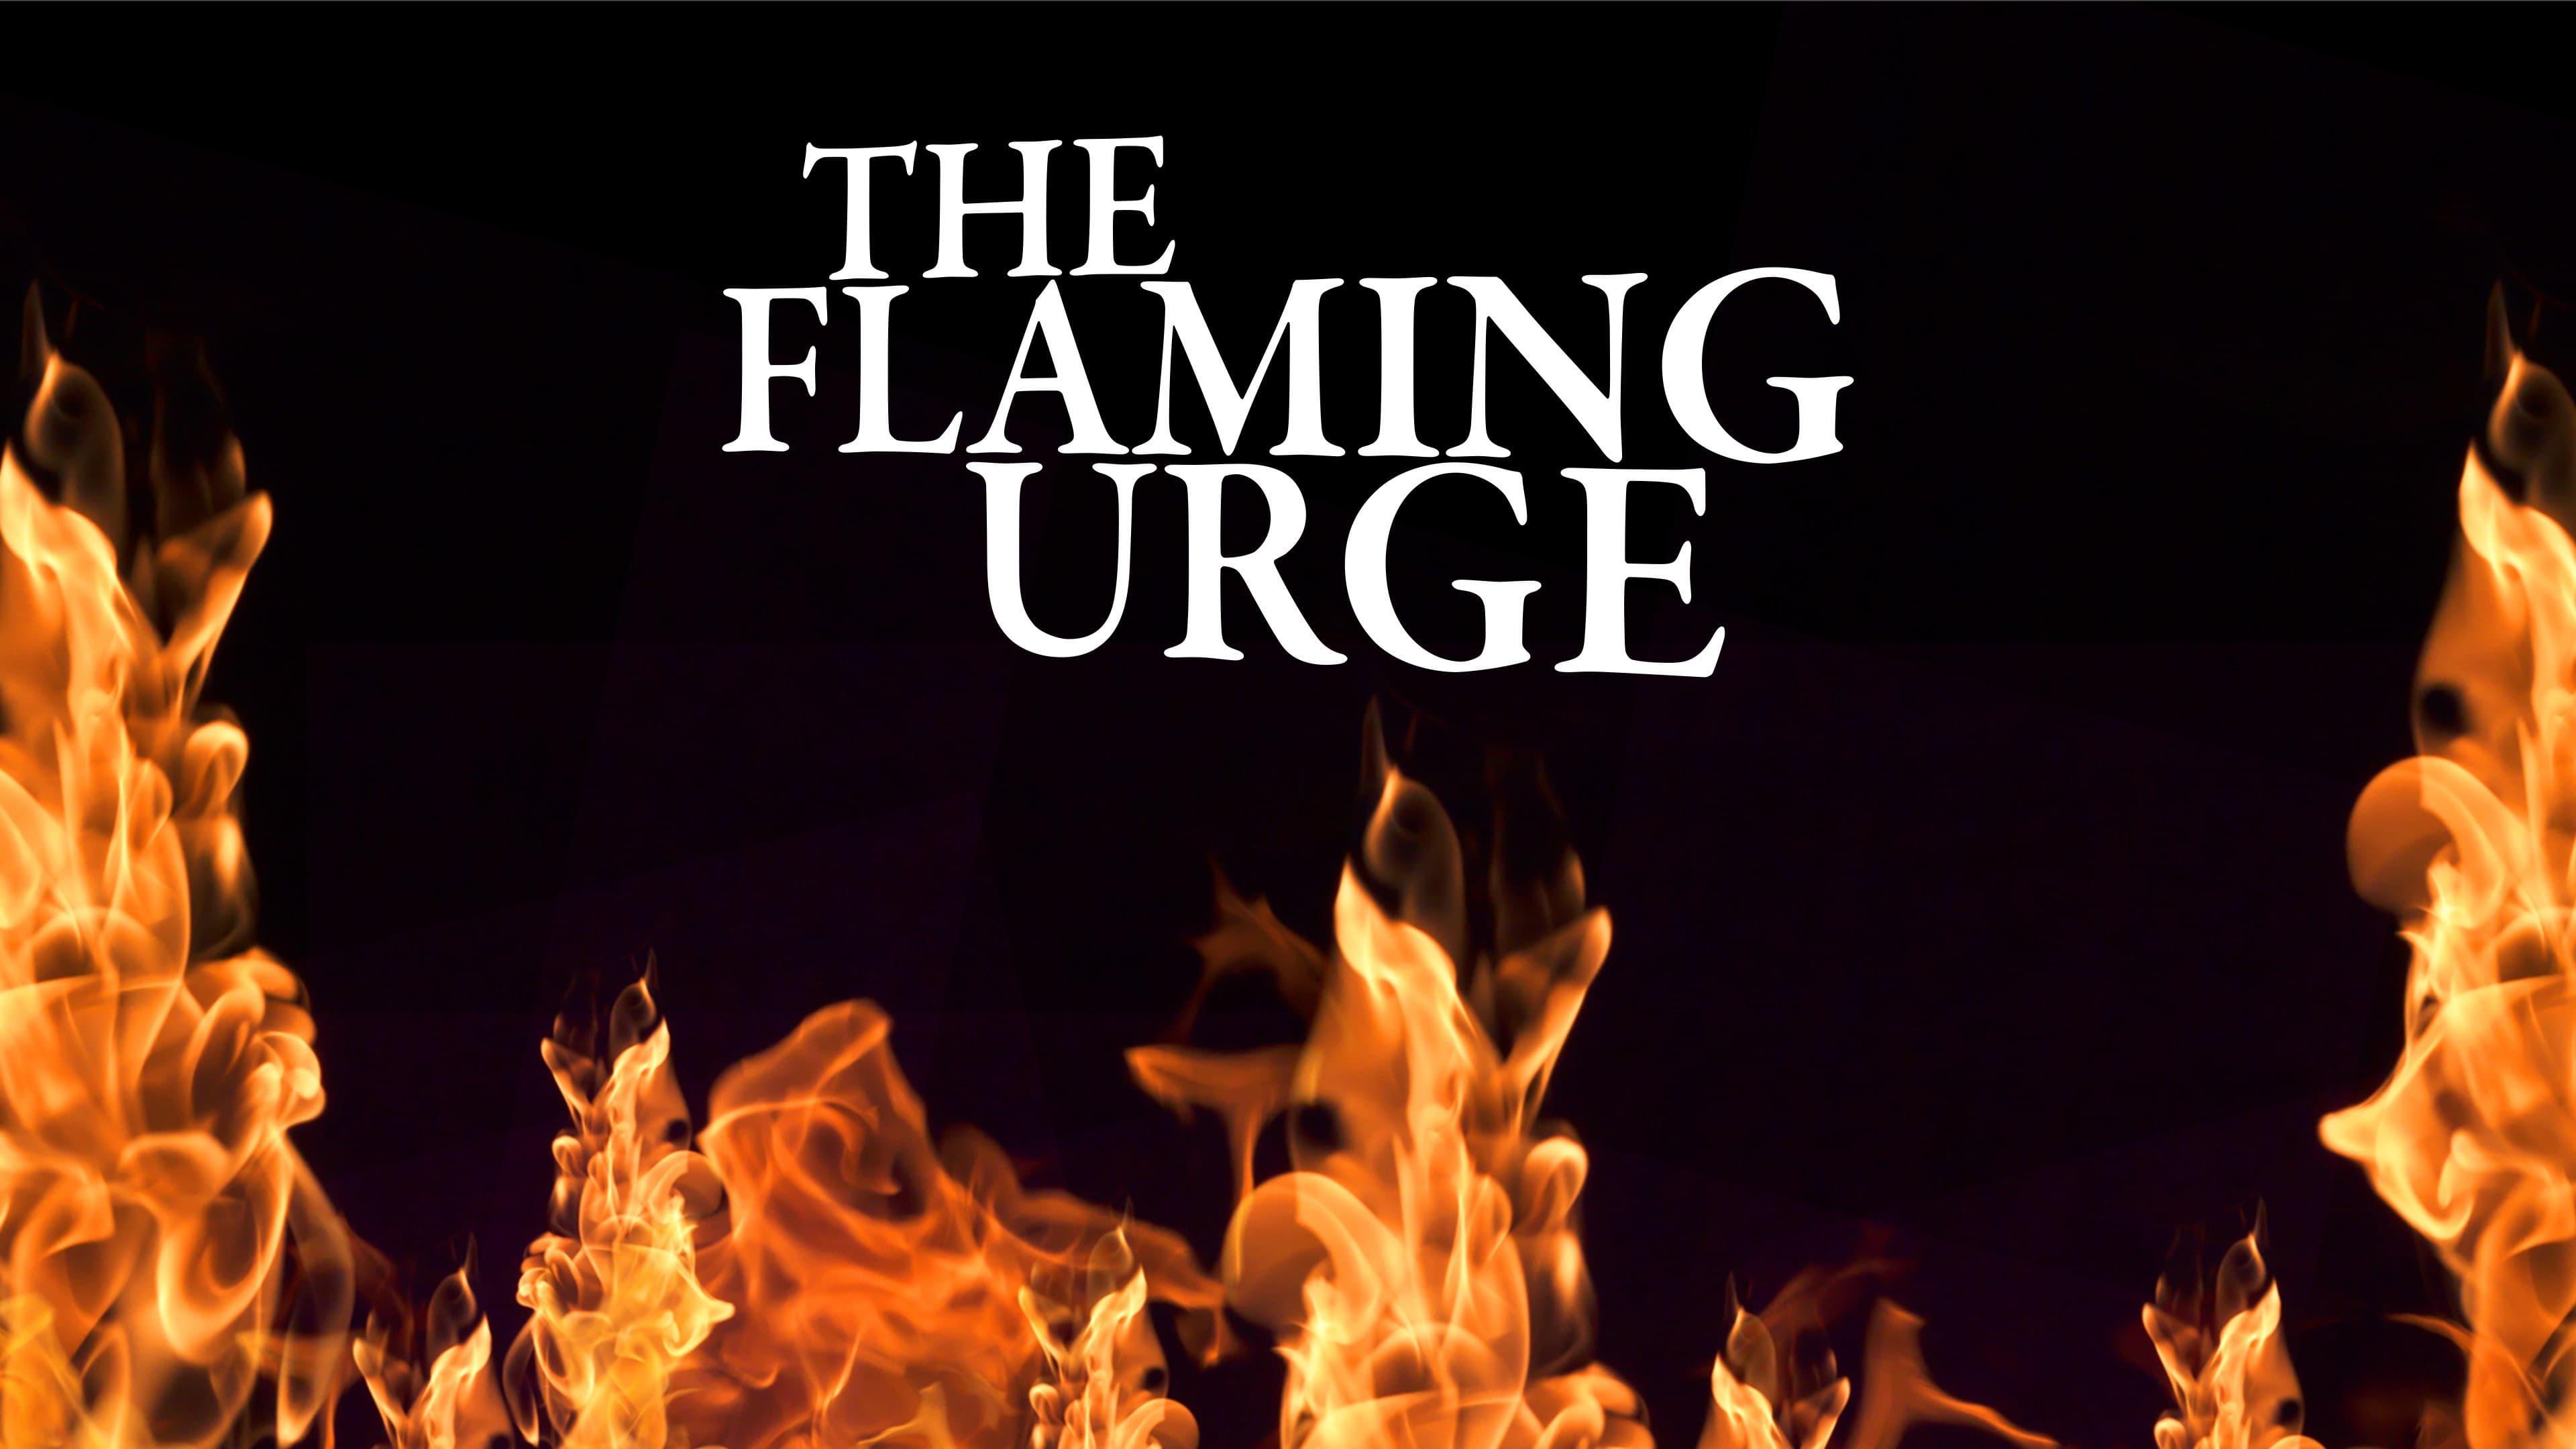 The Flaming Urge backdrop